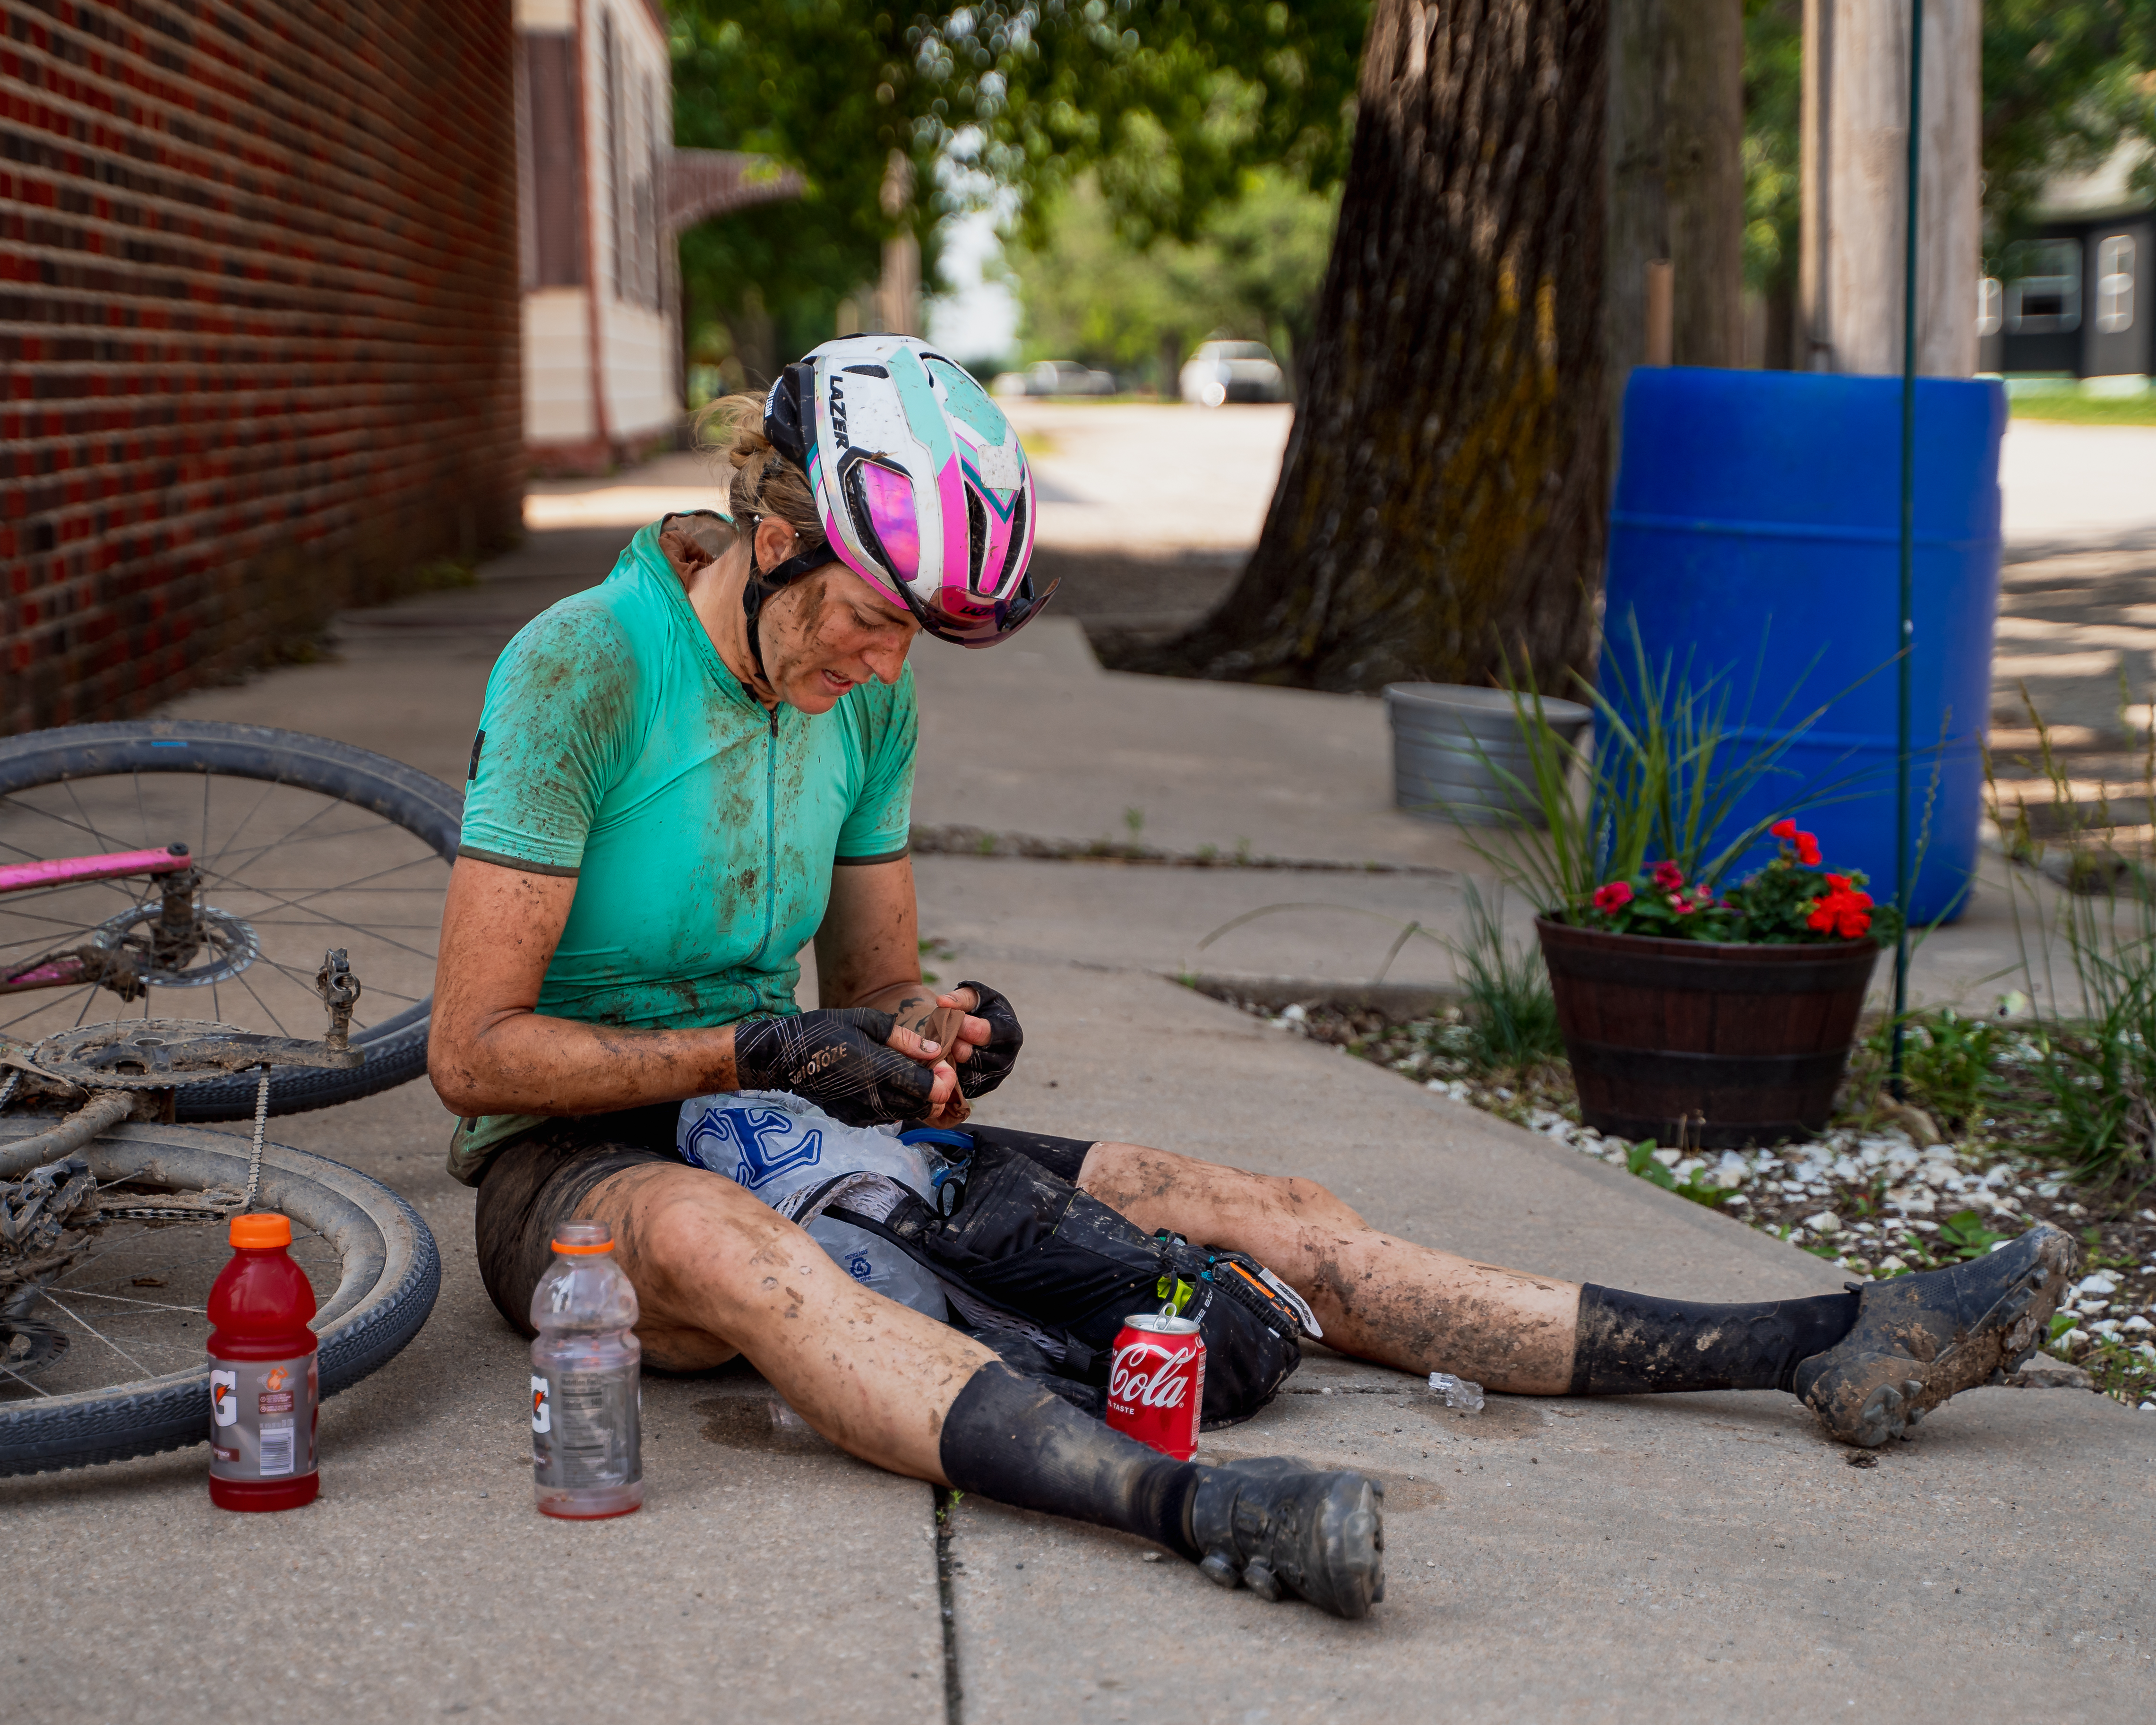 Shimano athlete Kristen Legan sitting enjoying snacks during the Unbound XL gravel bike race